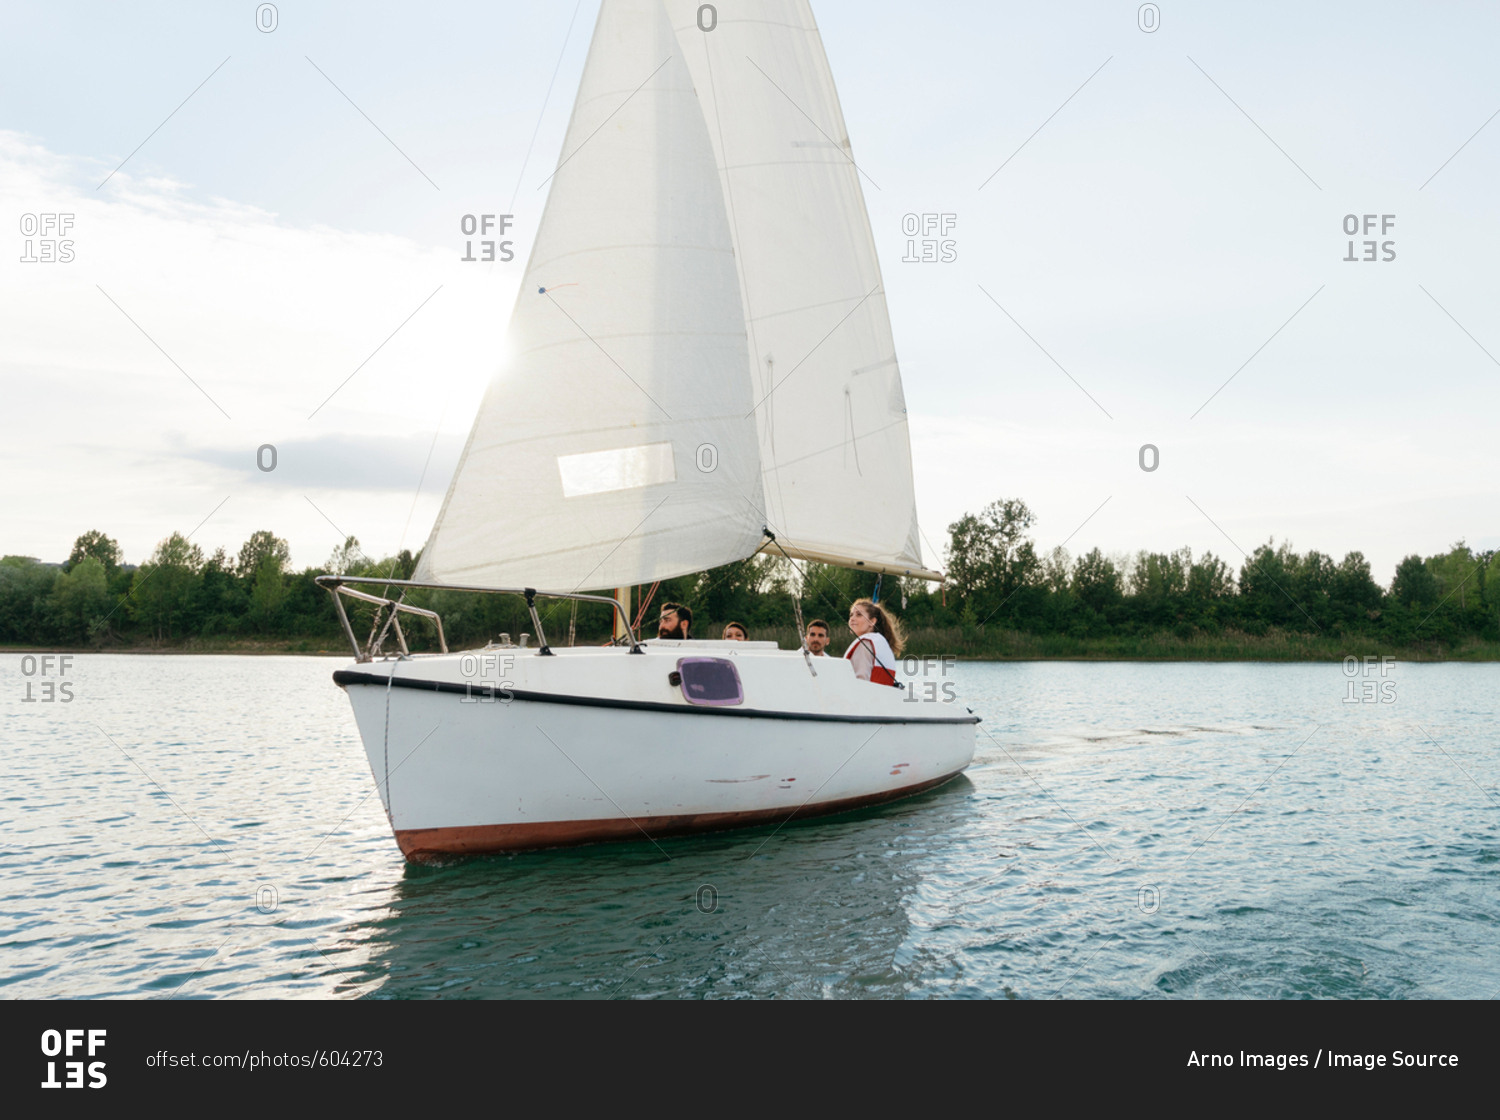 Group of people on sailing boat on lake, Signa, Tuscany, Italy